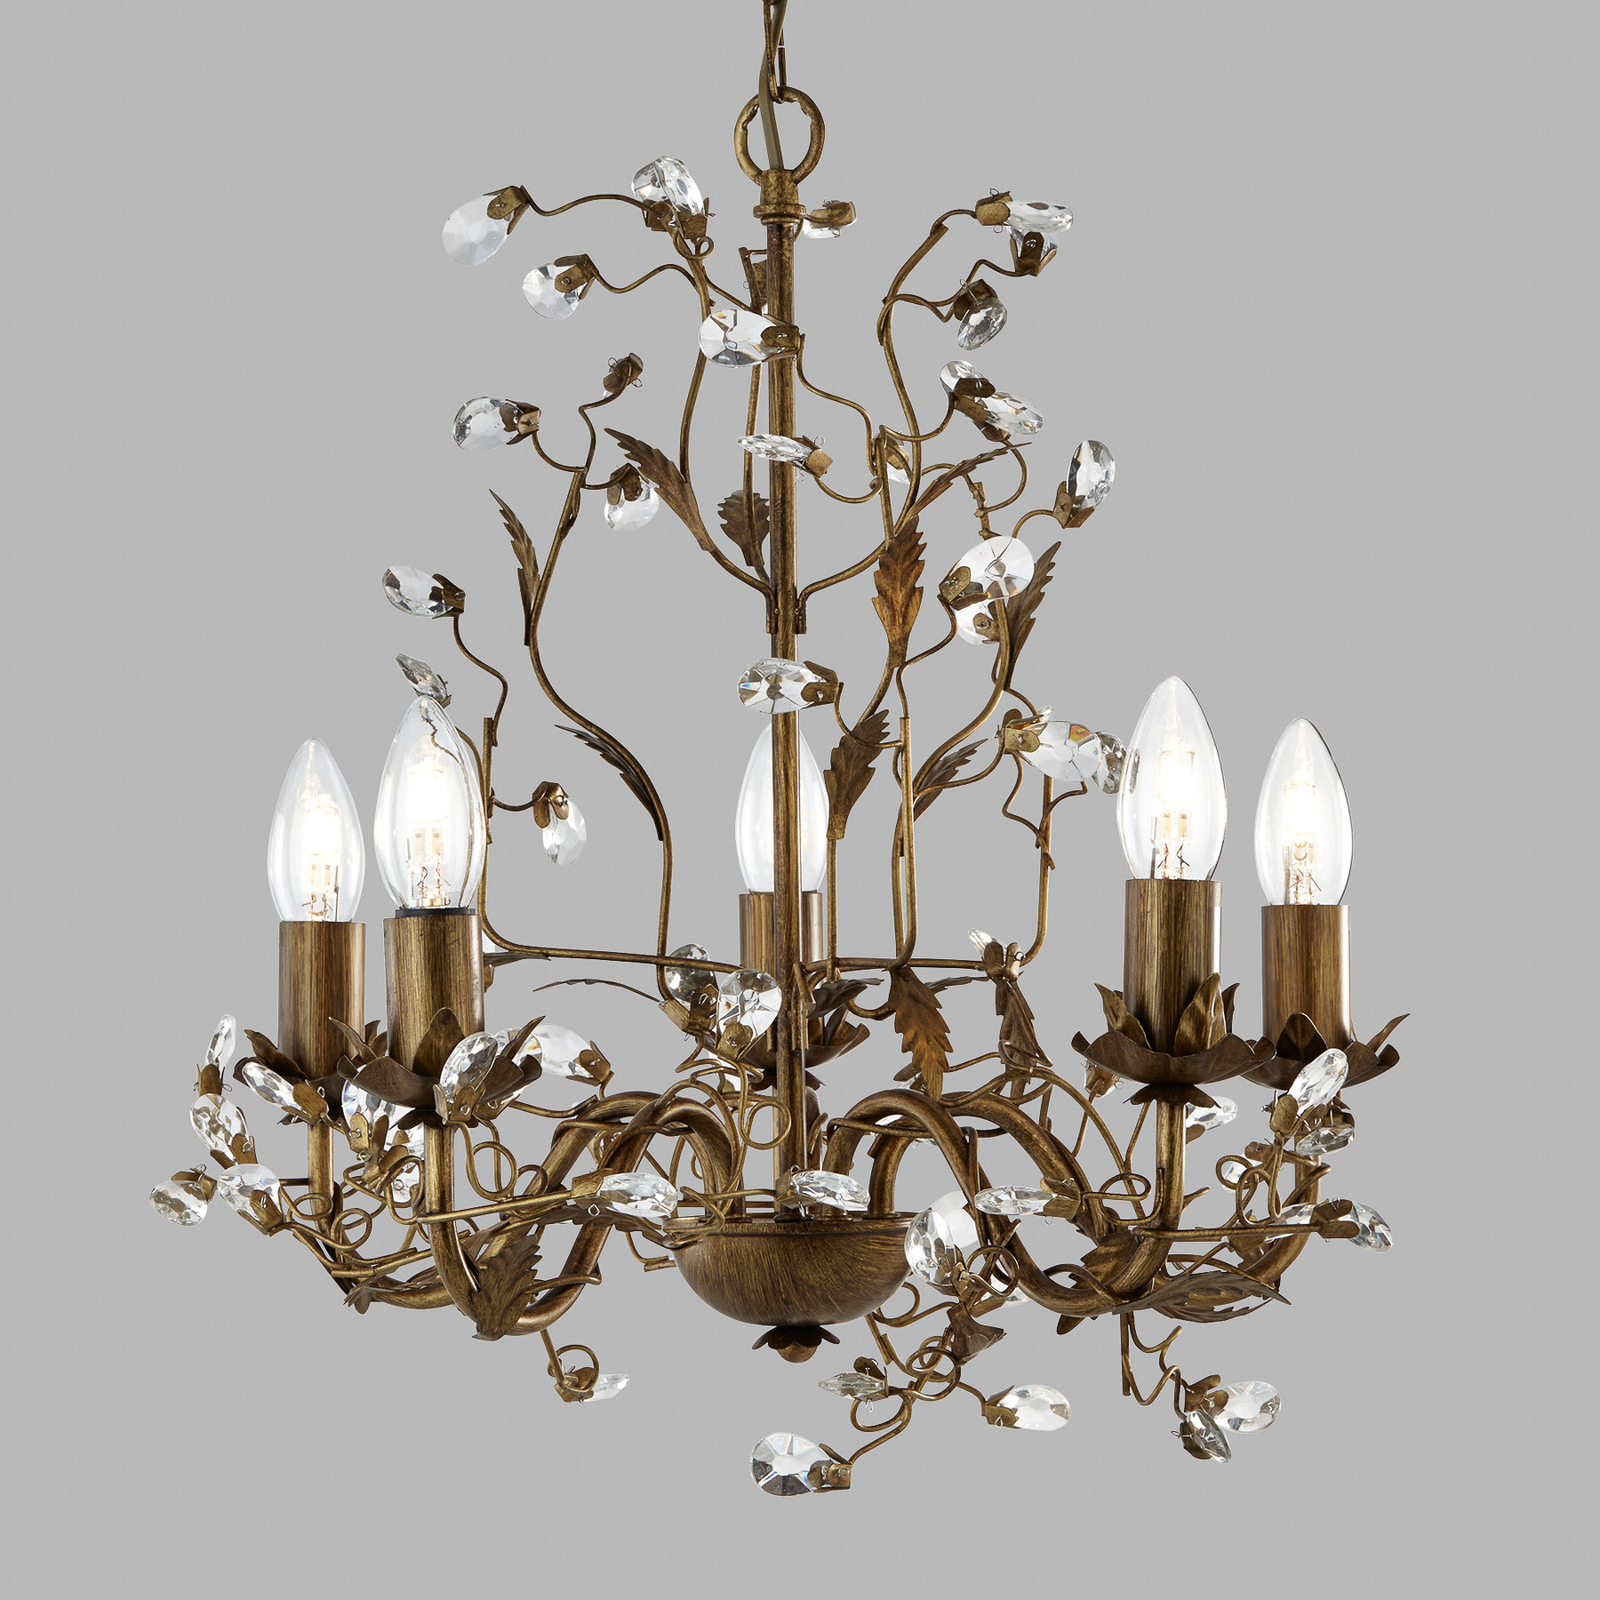 Wonderful Almandite chandelier with 5 bulbs